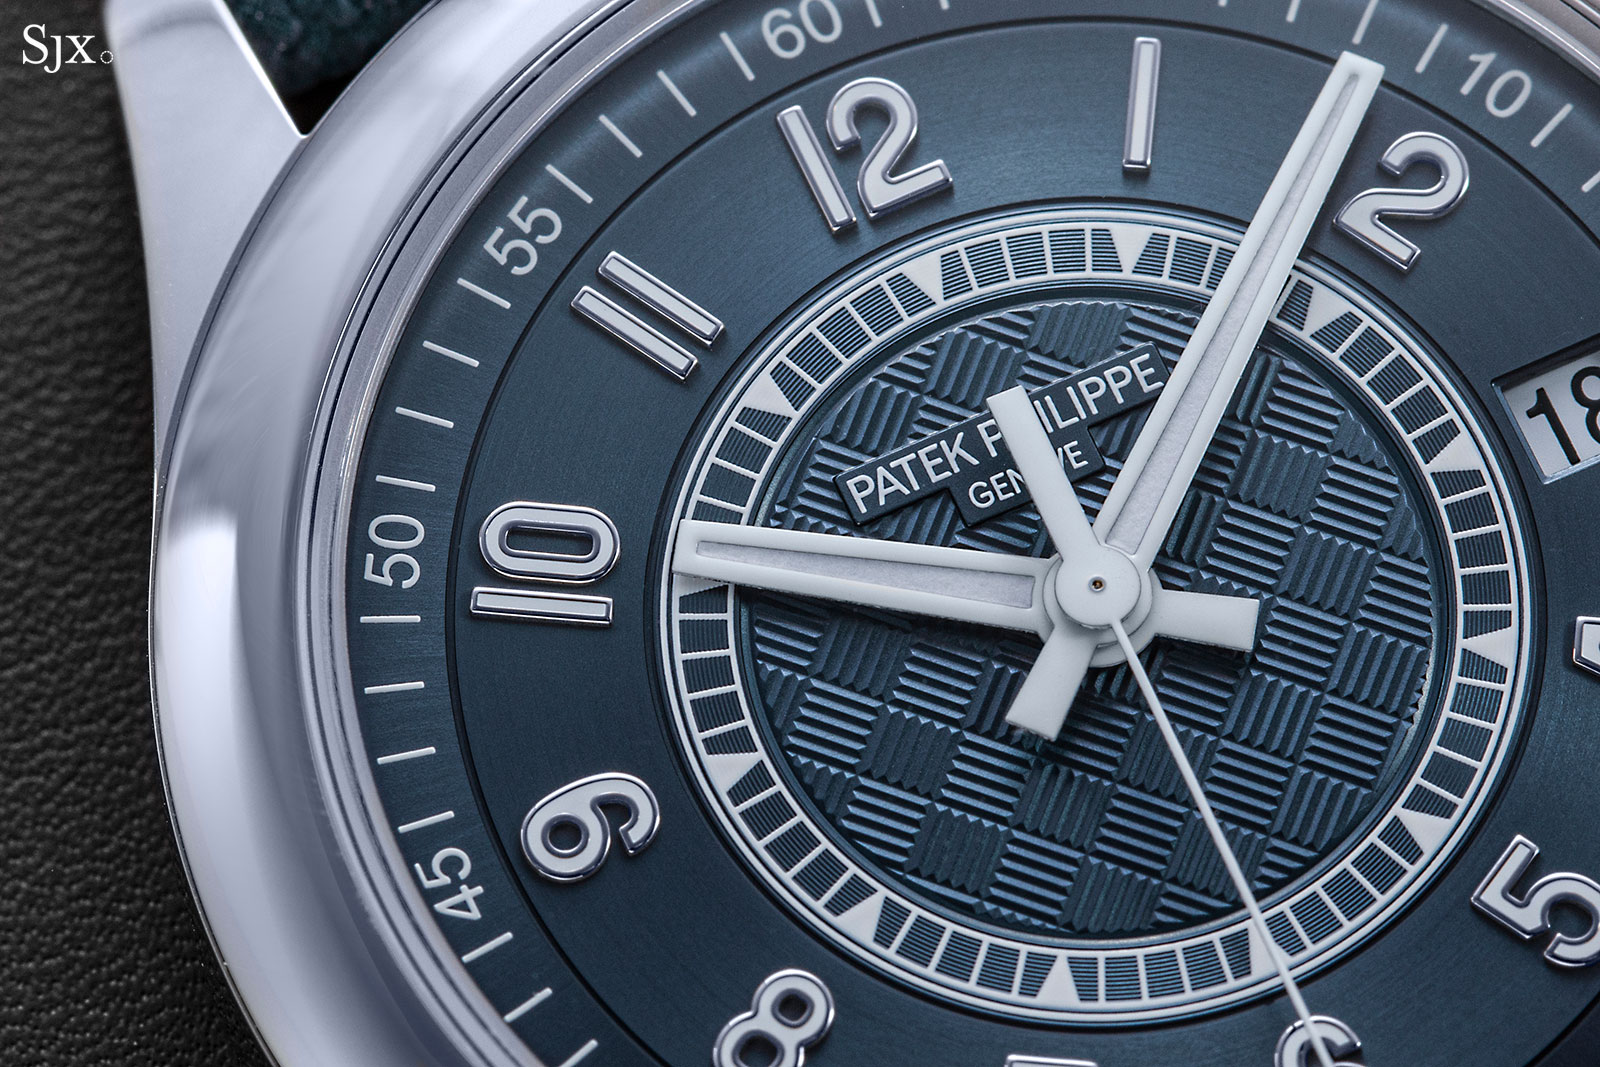 Up Close Patek Philippe Calatrava Ref 6007a New Manufacture 19 Sjx Watches